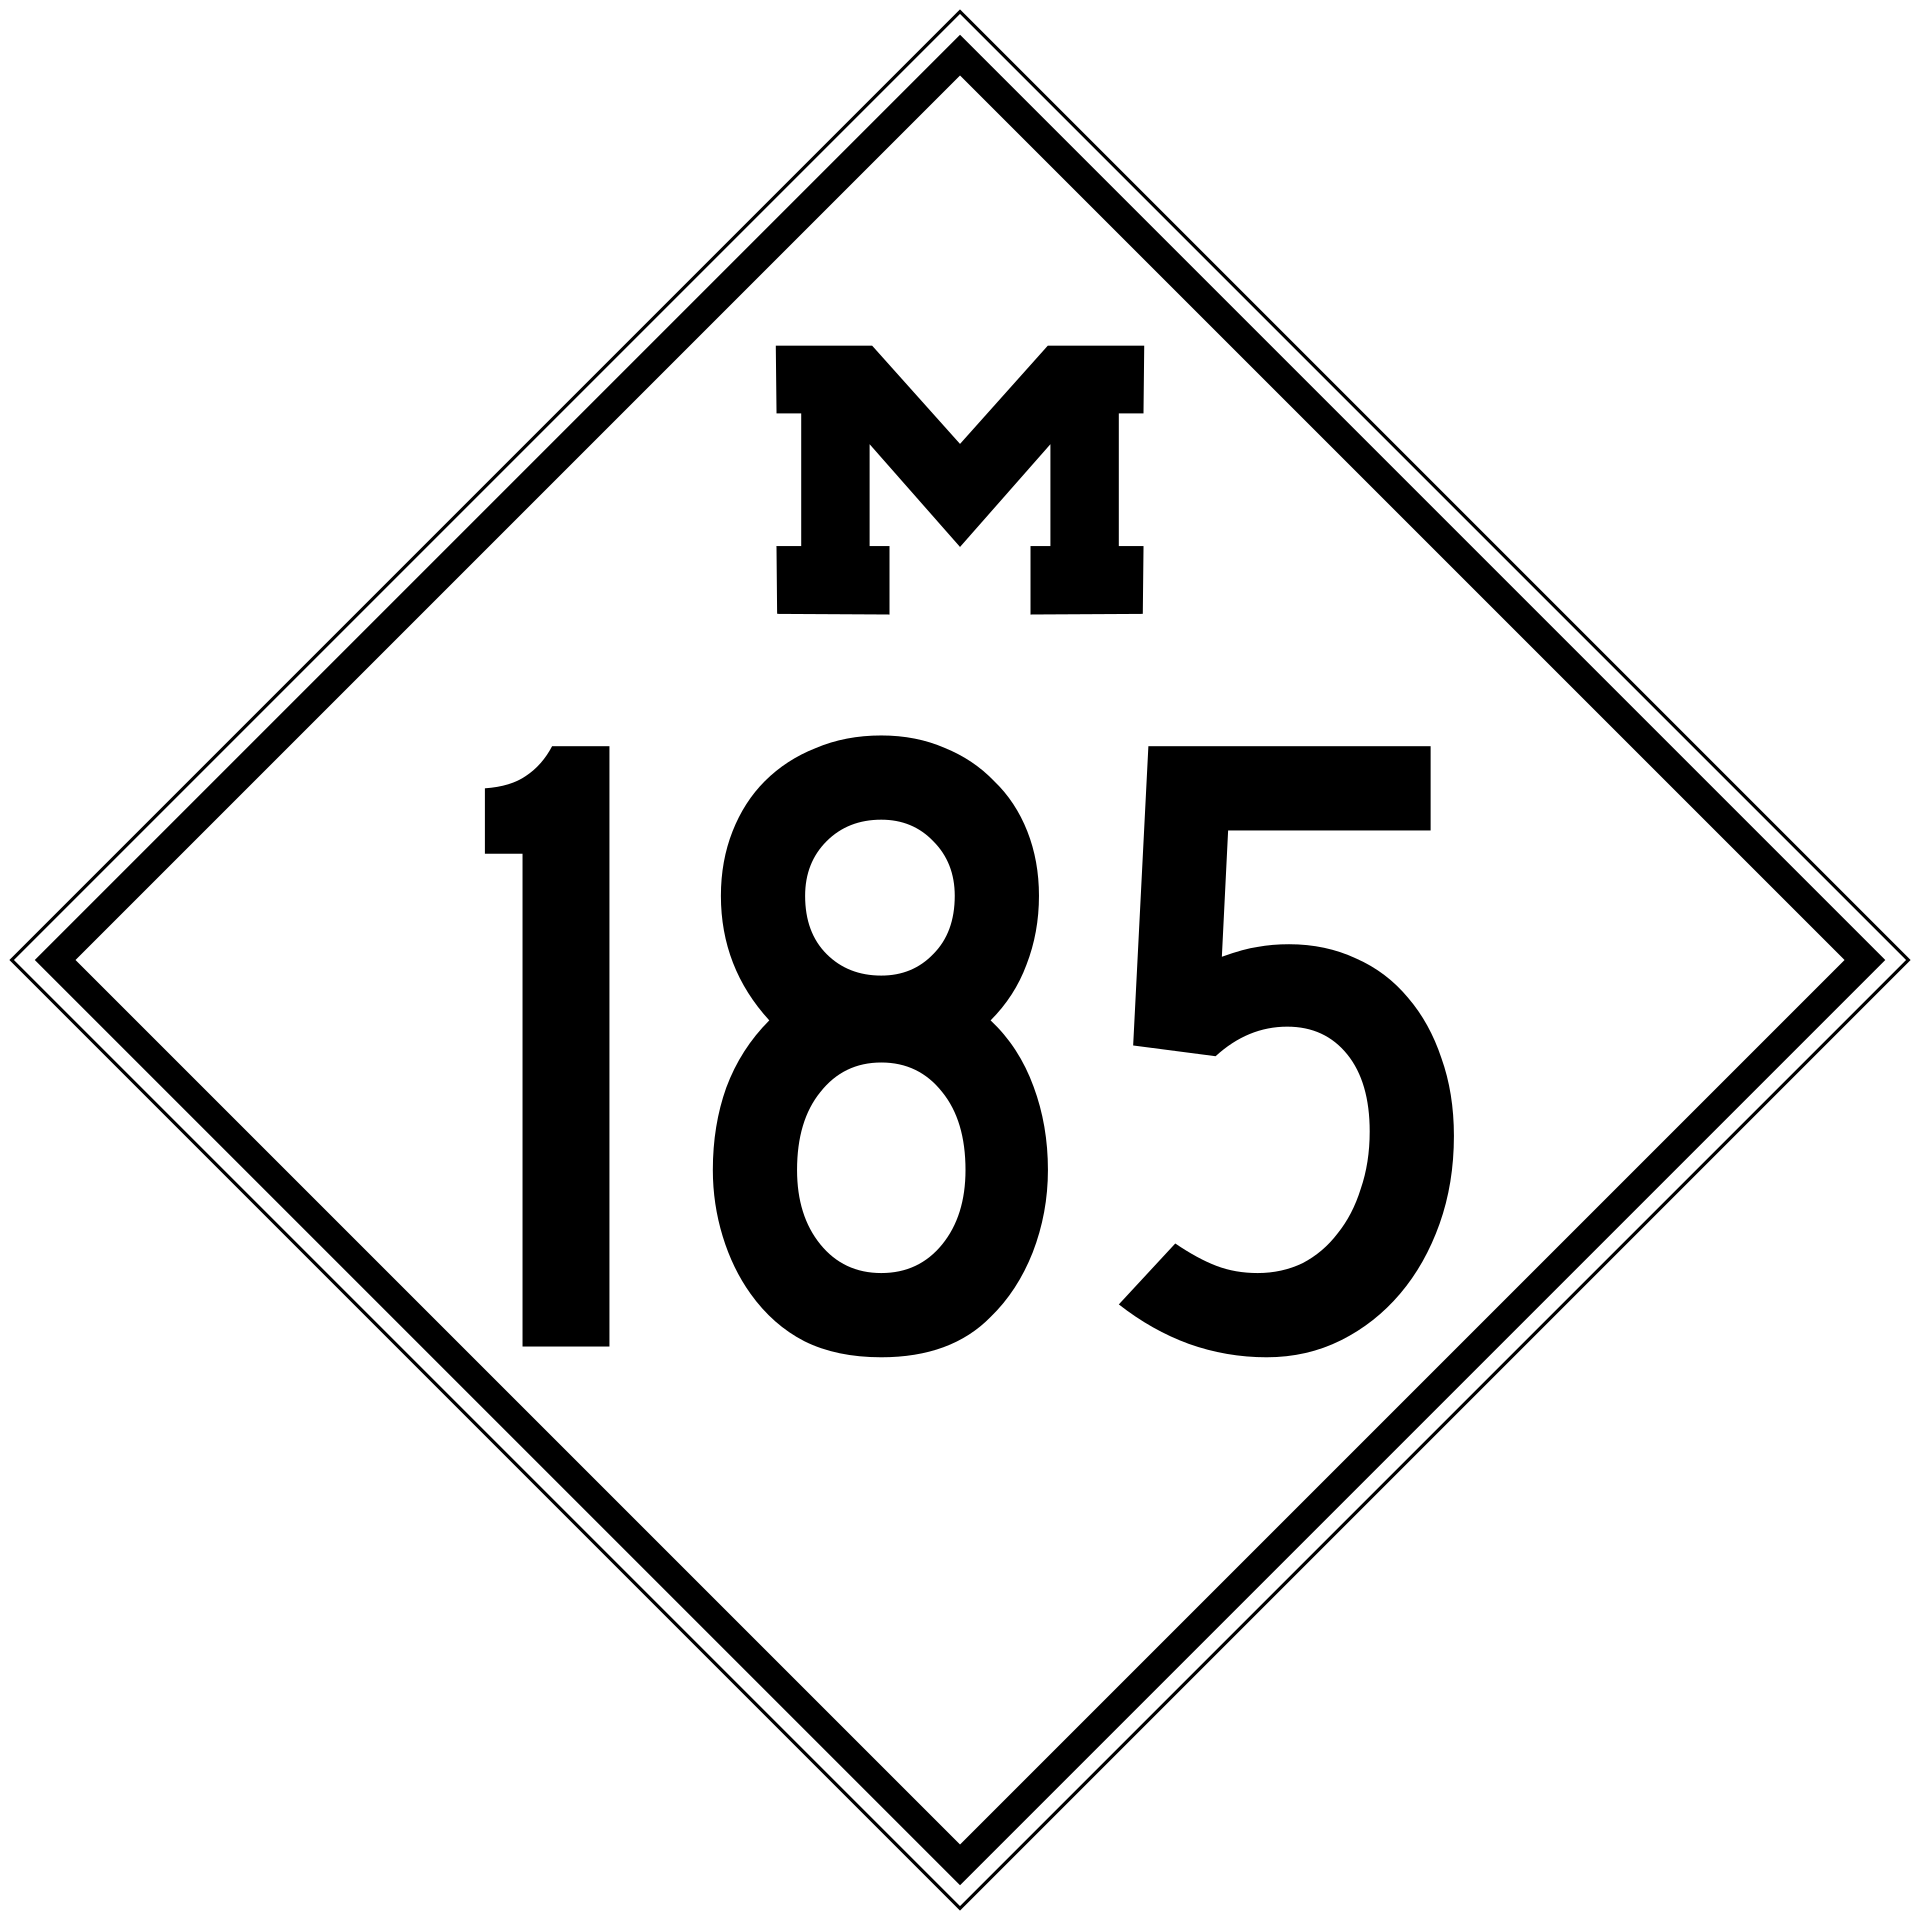 Historic M-185 Route Marker